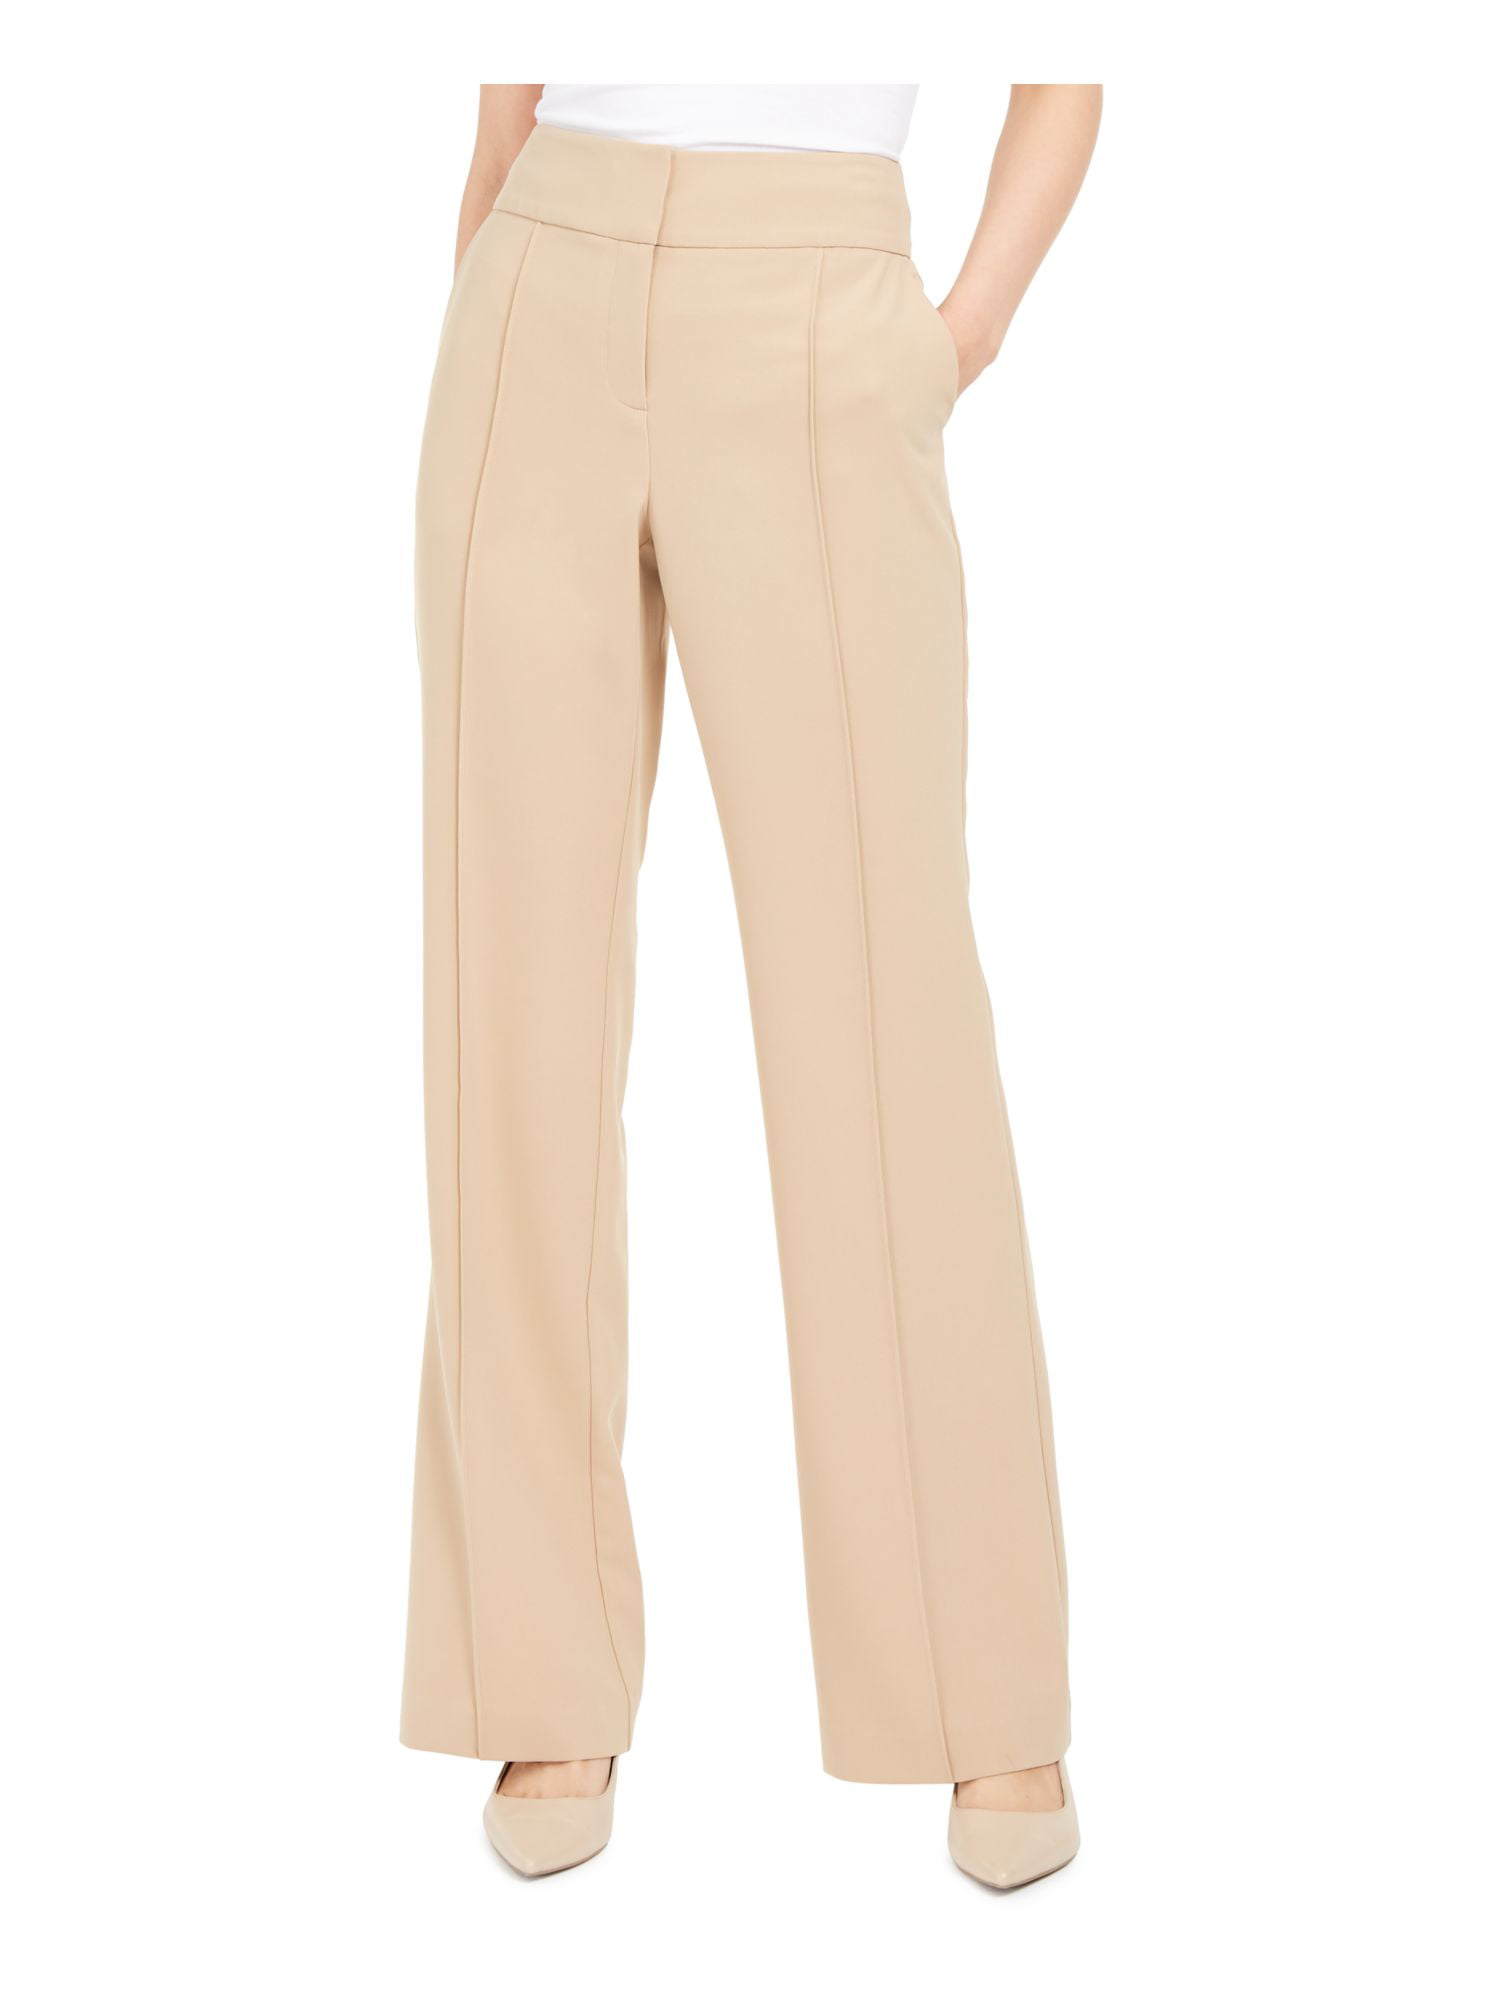 Alfani - ALFANI Womens Brown Solid Boot Cut Pants Size 12 - Walmart.com ...